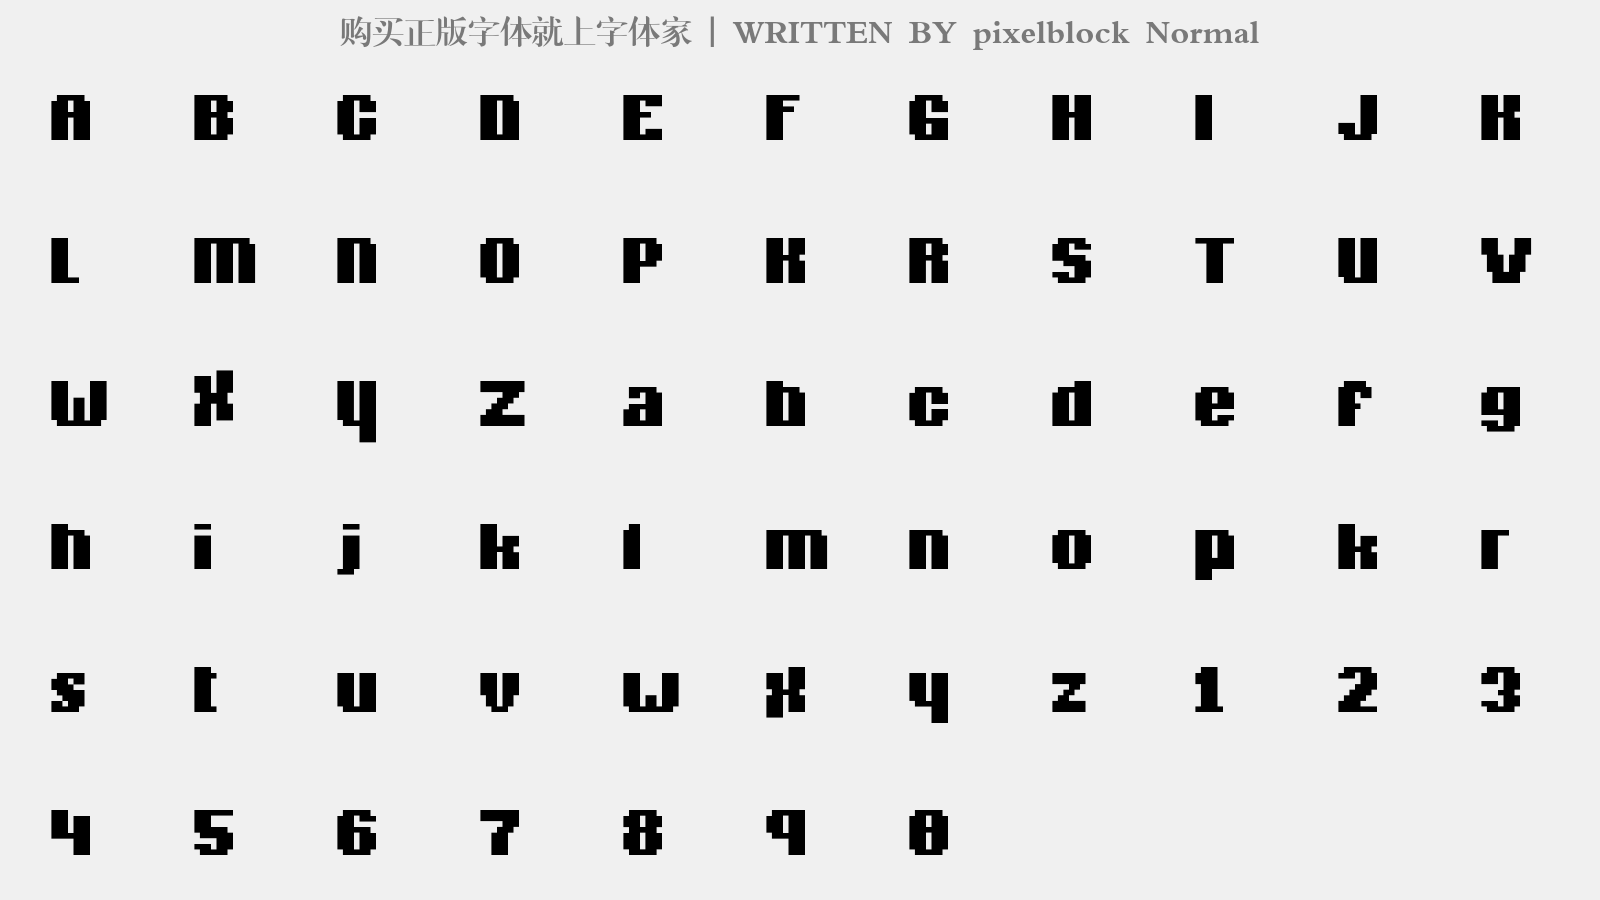 pixelblock Normal - 大写字母/小写字母/数字